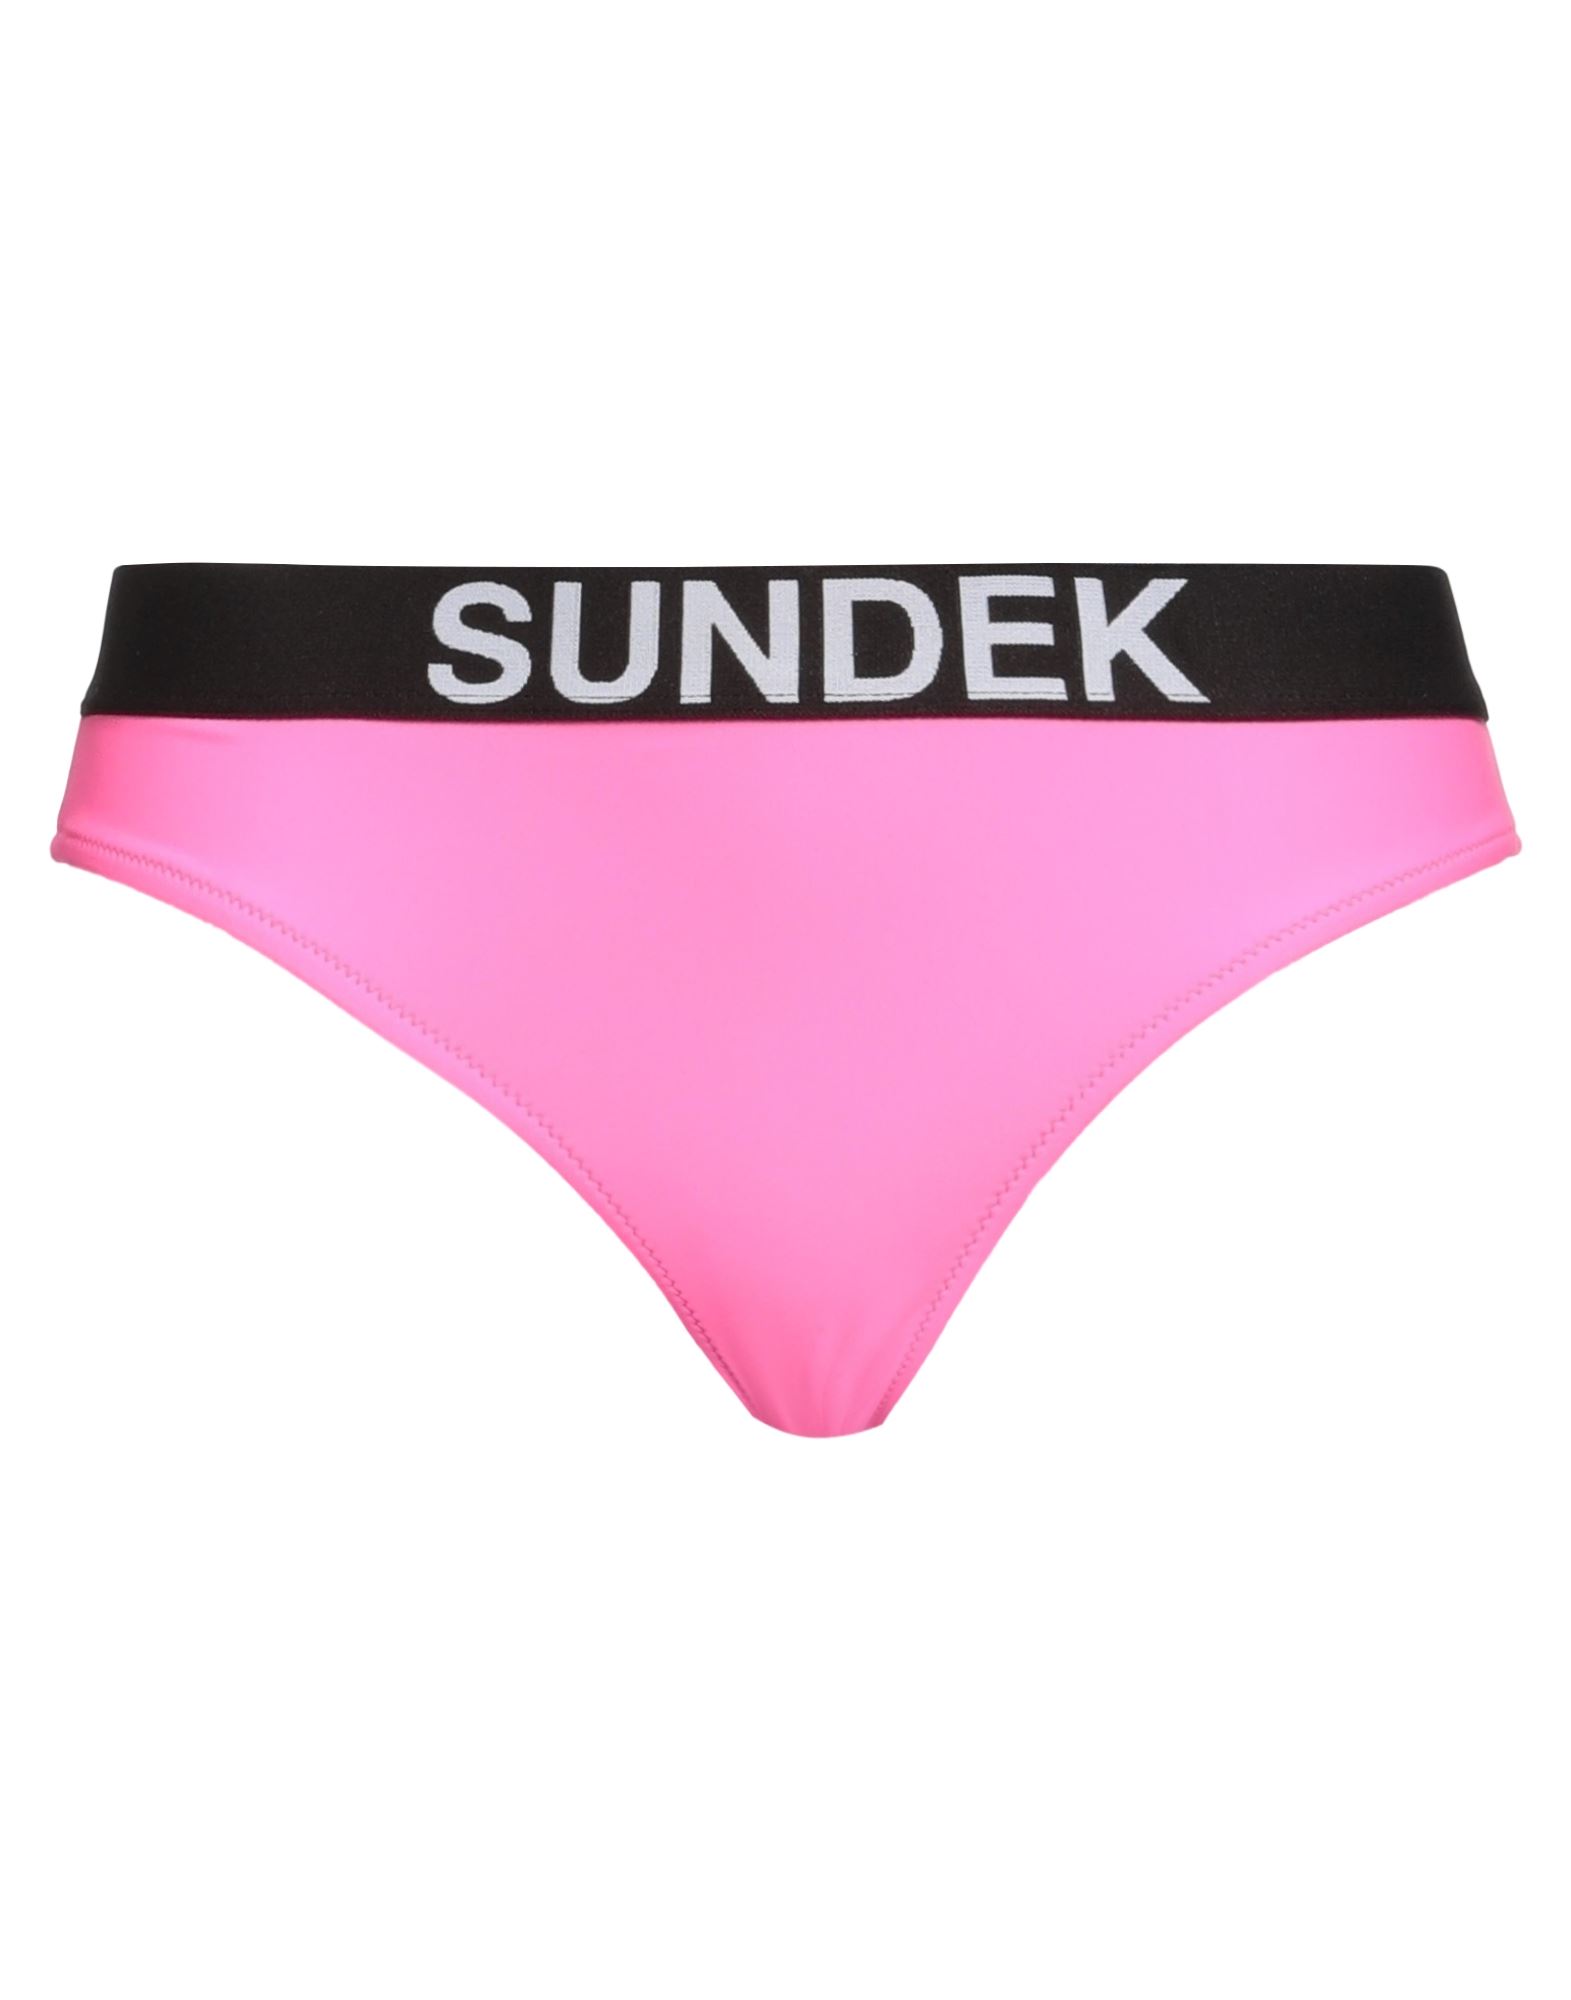 SUNDEK Bikinislip & Badehose Damen Fuchsia von SUNDEK